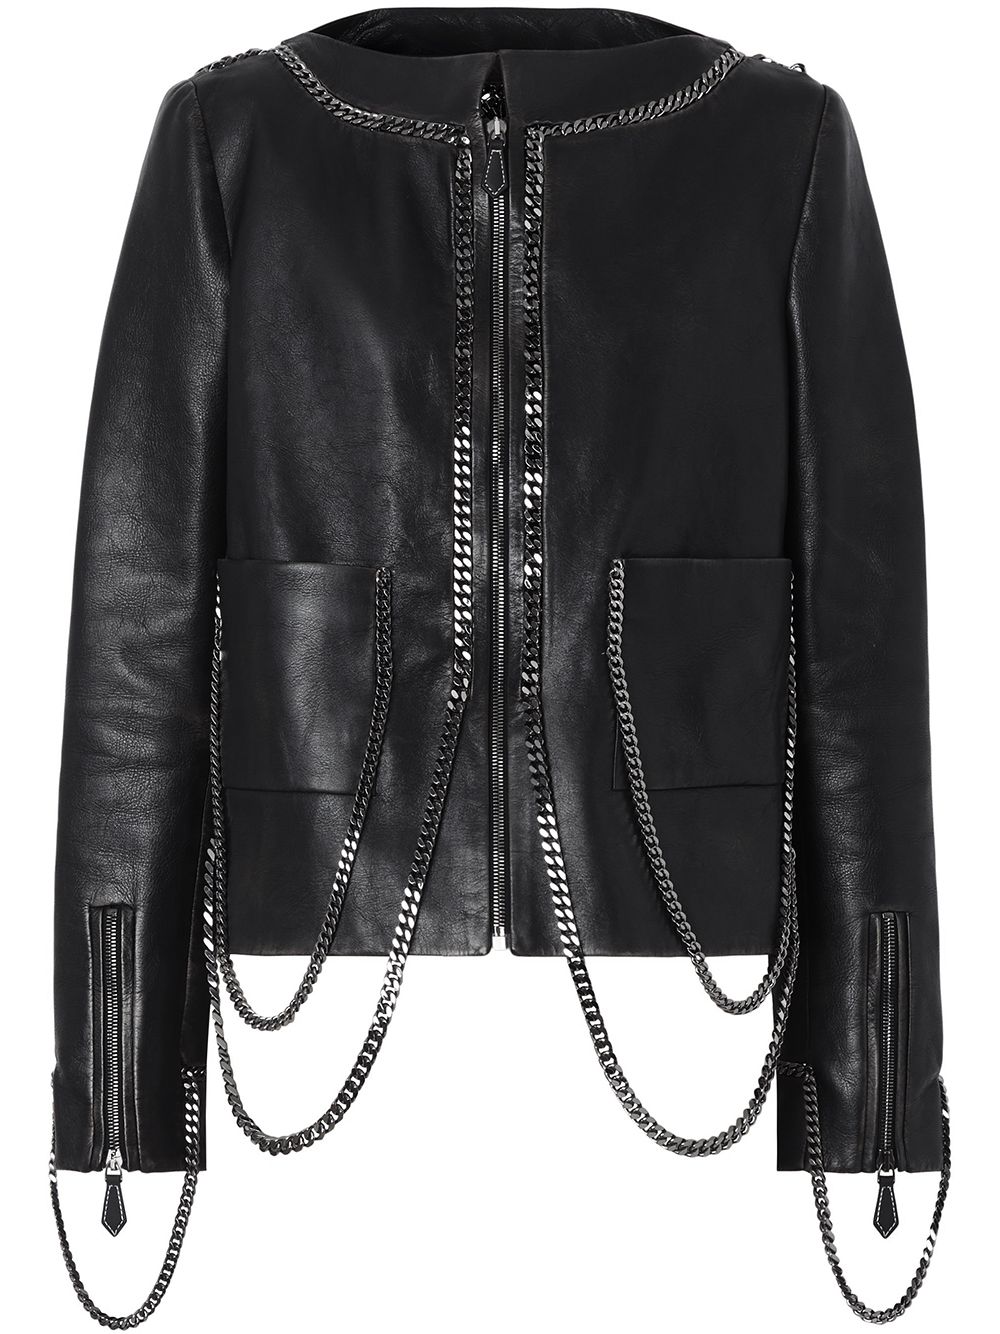 Burberry chain-link detail leather jacket - Black von Burberry